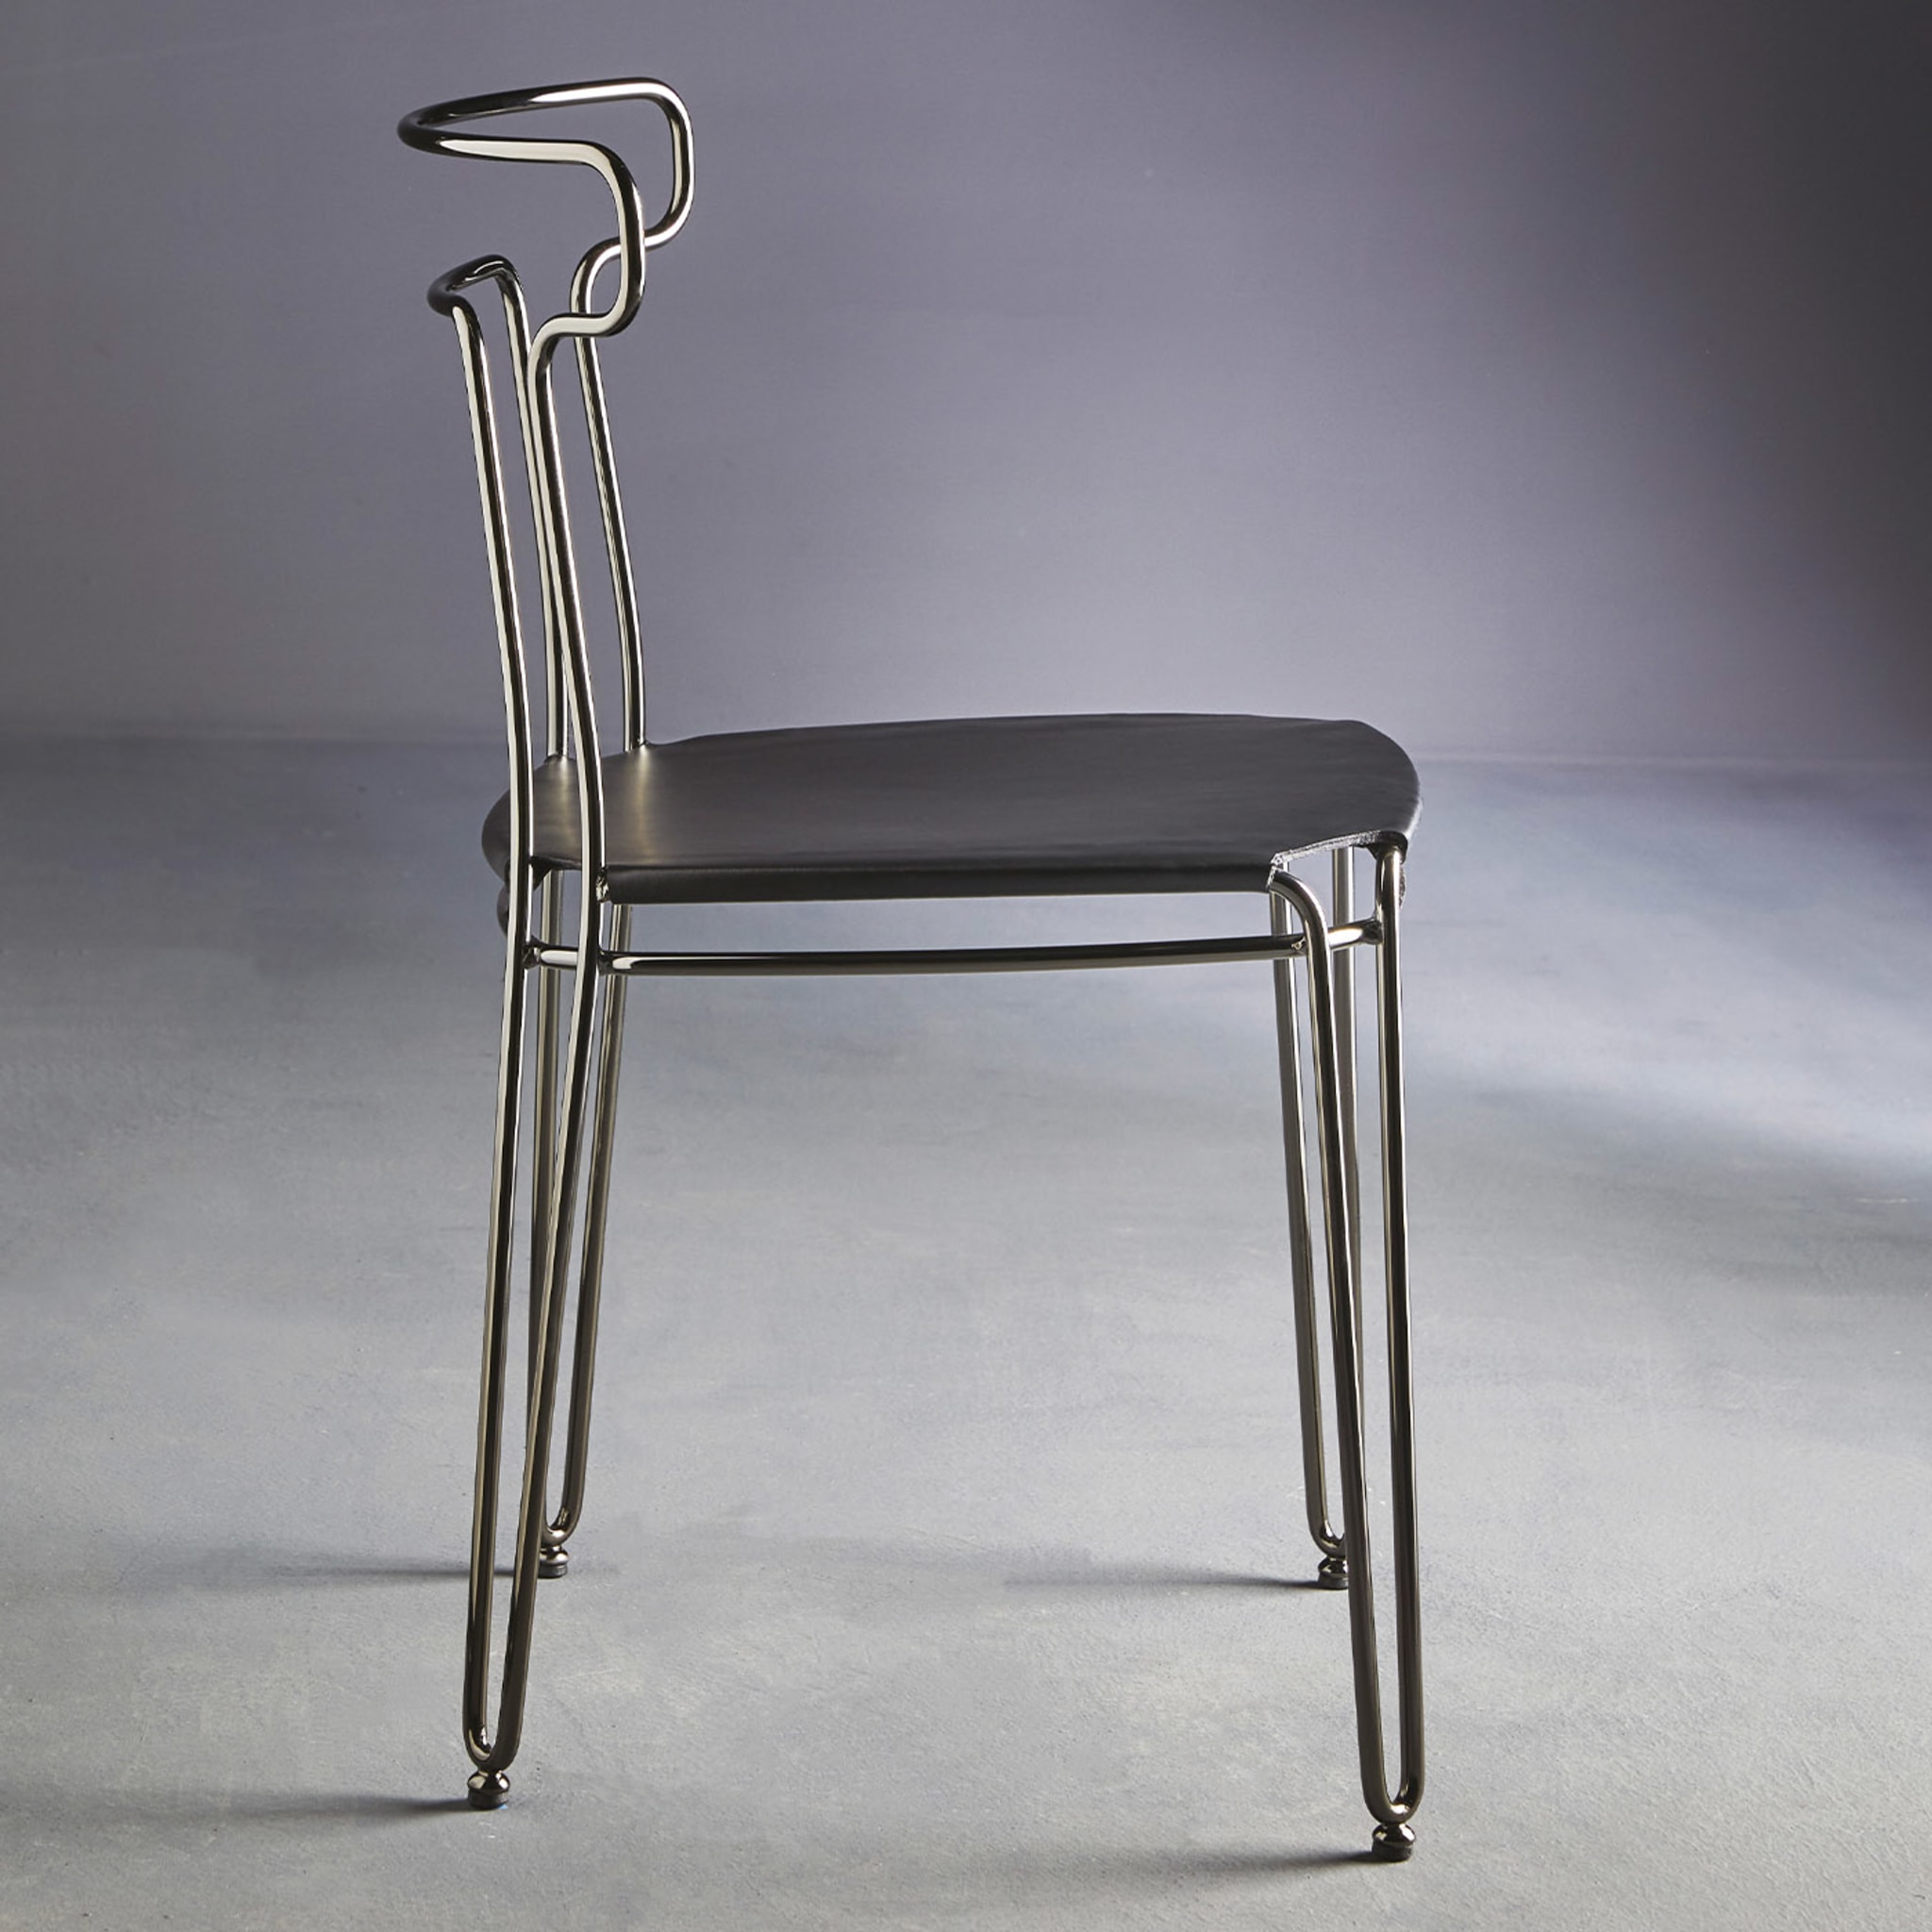 Jackie Black Chair by S. Grassi - Alternative view 3